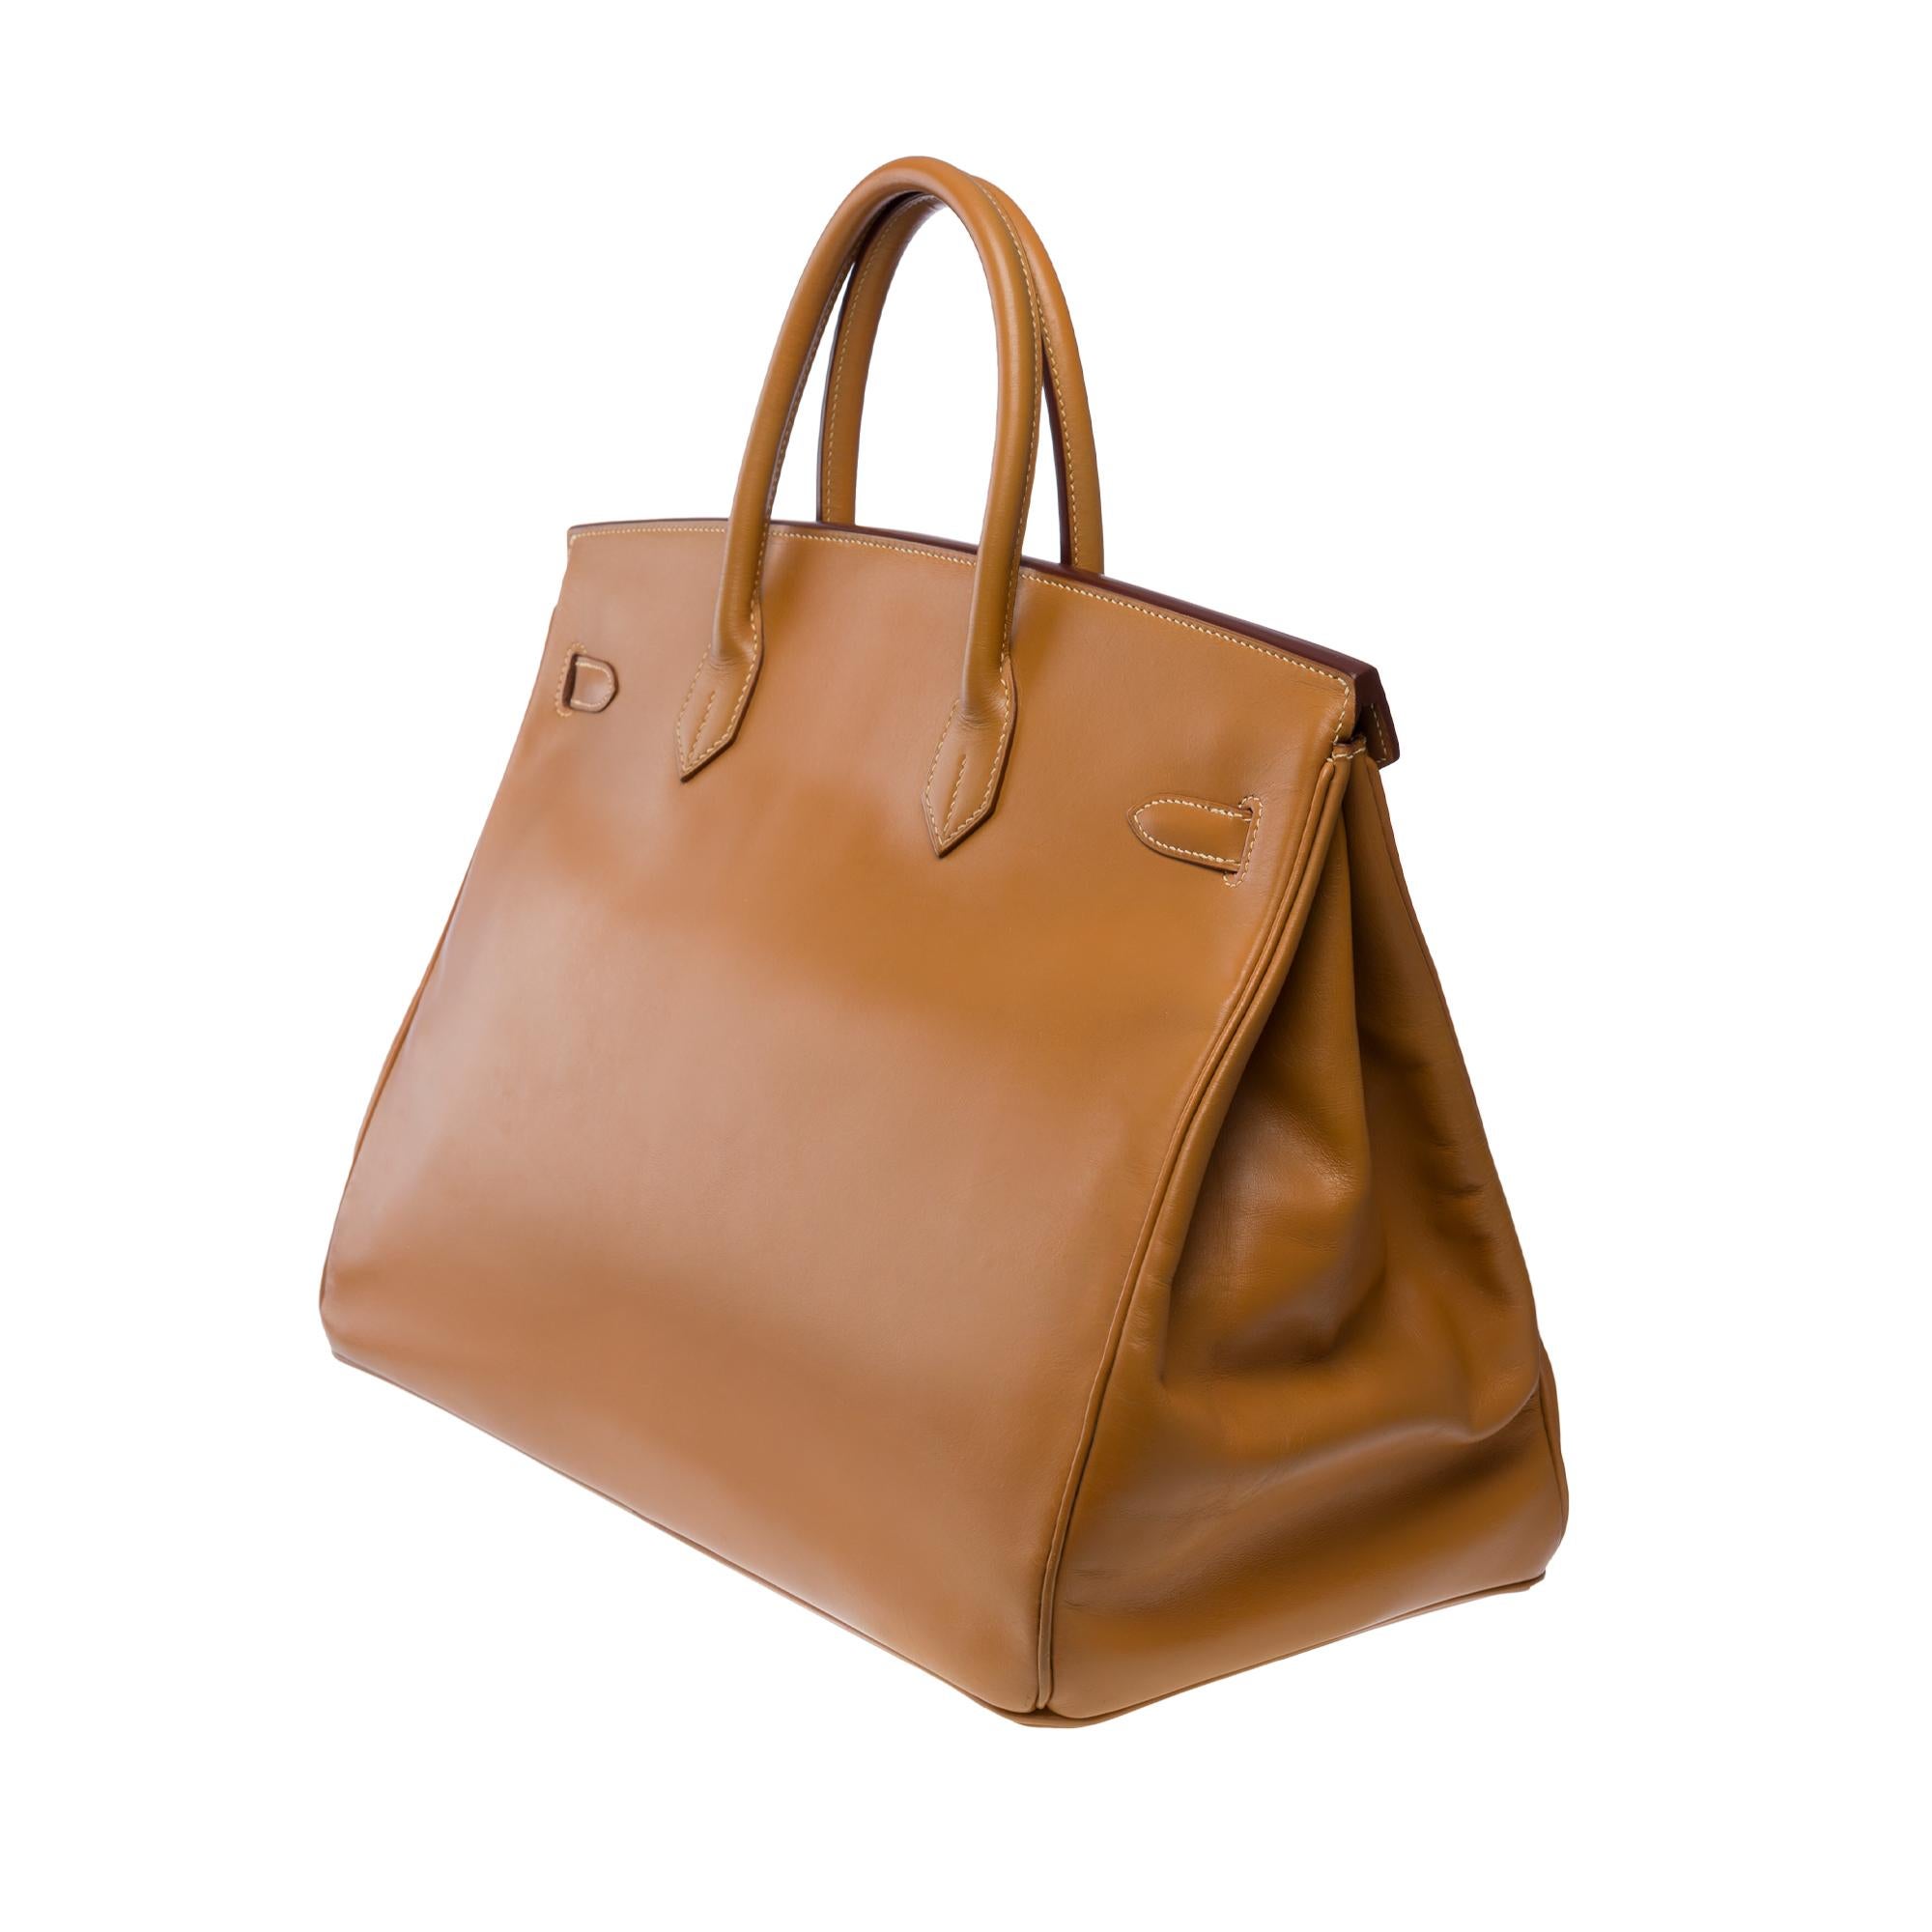 Women's or Men's Fantastic Hermes Birkin 40 handbag in Camel (Gold) Chamonix leather, GHW For Sale